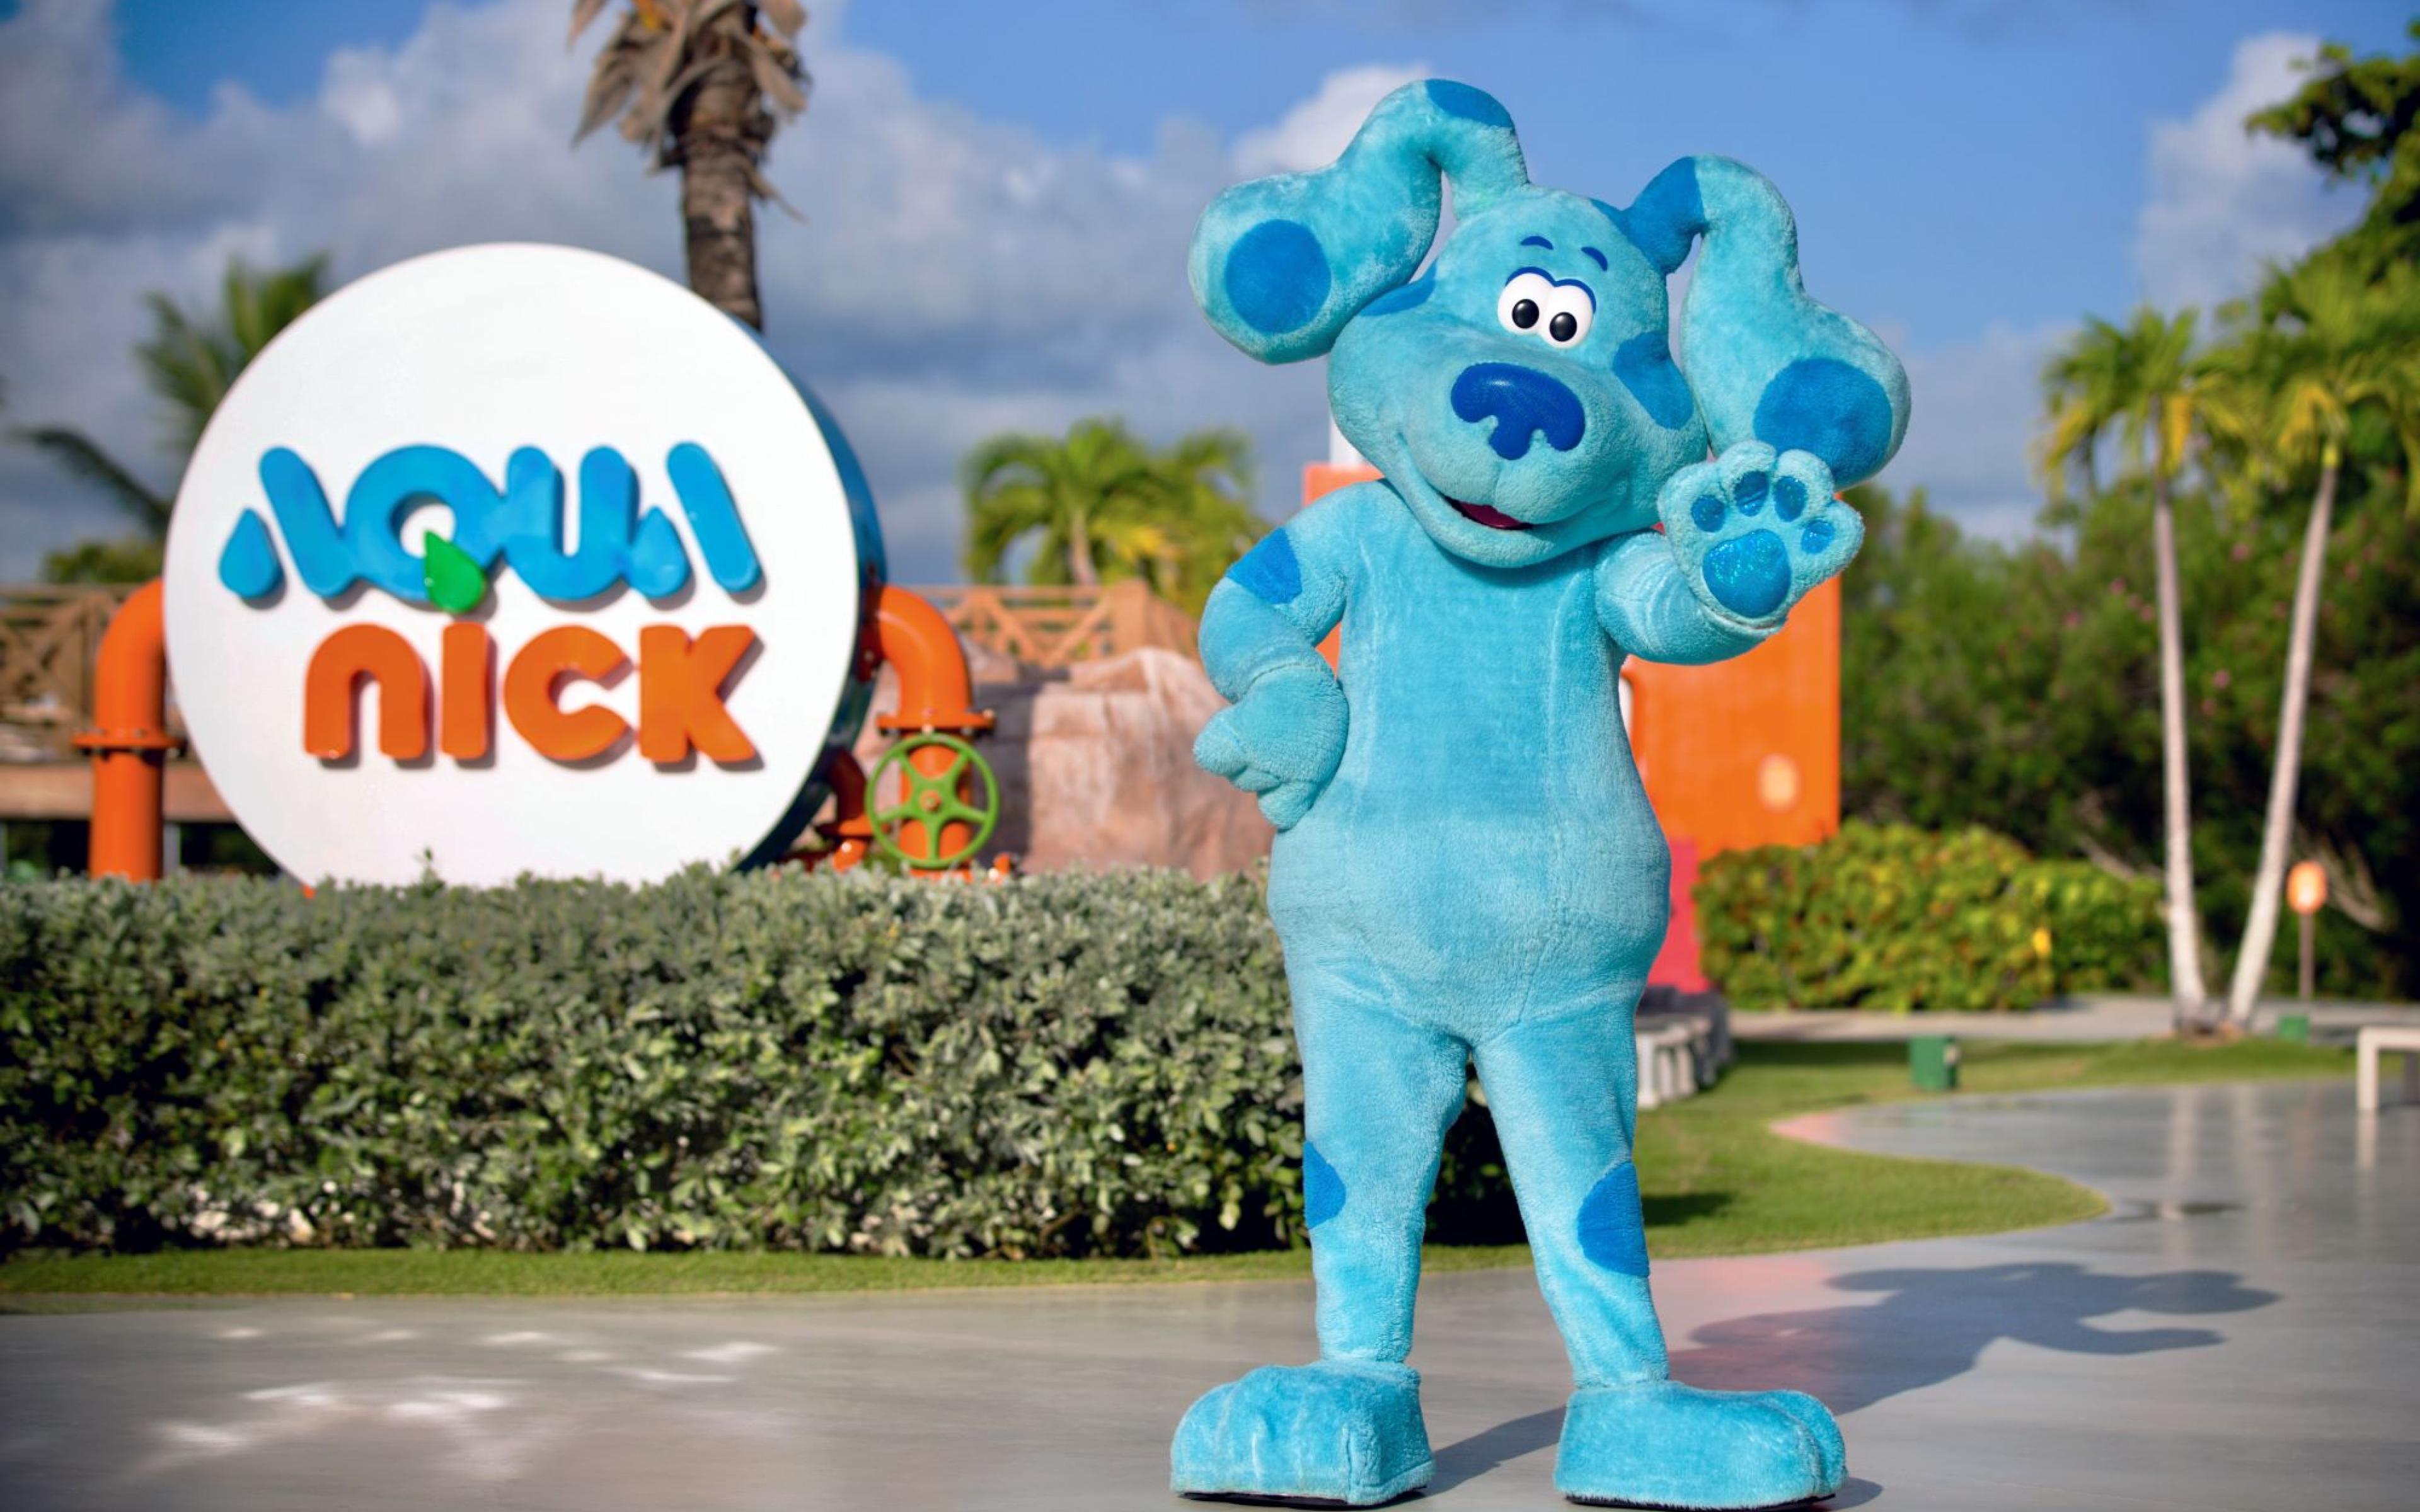 Blue character Aqua Nick